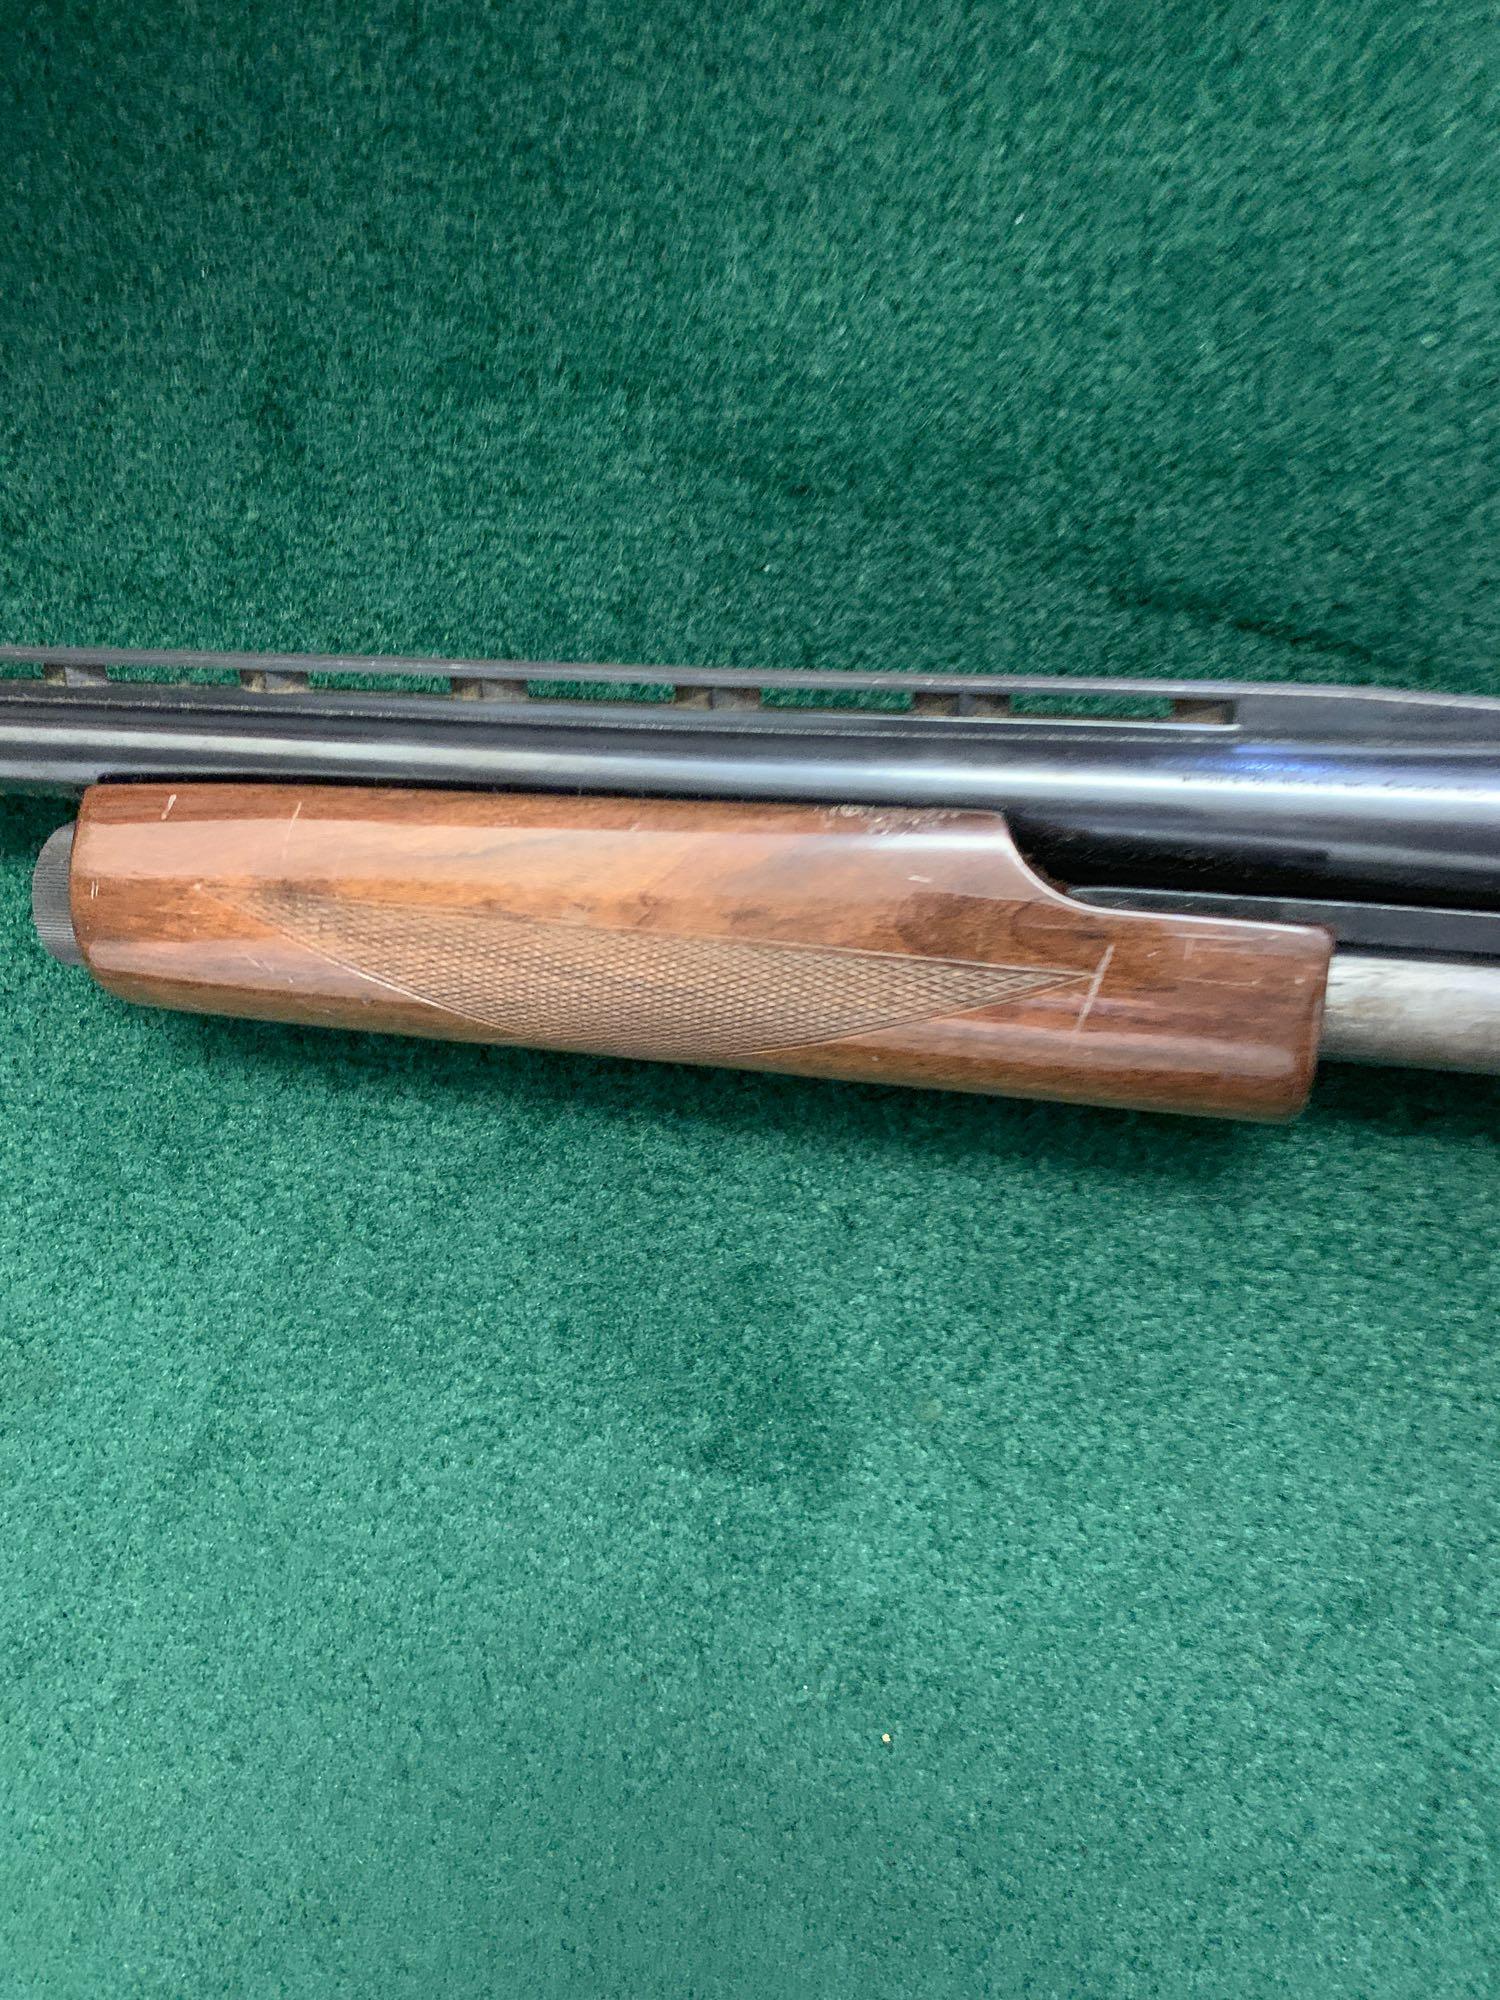 SKB Pump Shotgun 12 Gauge 3"